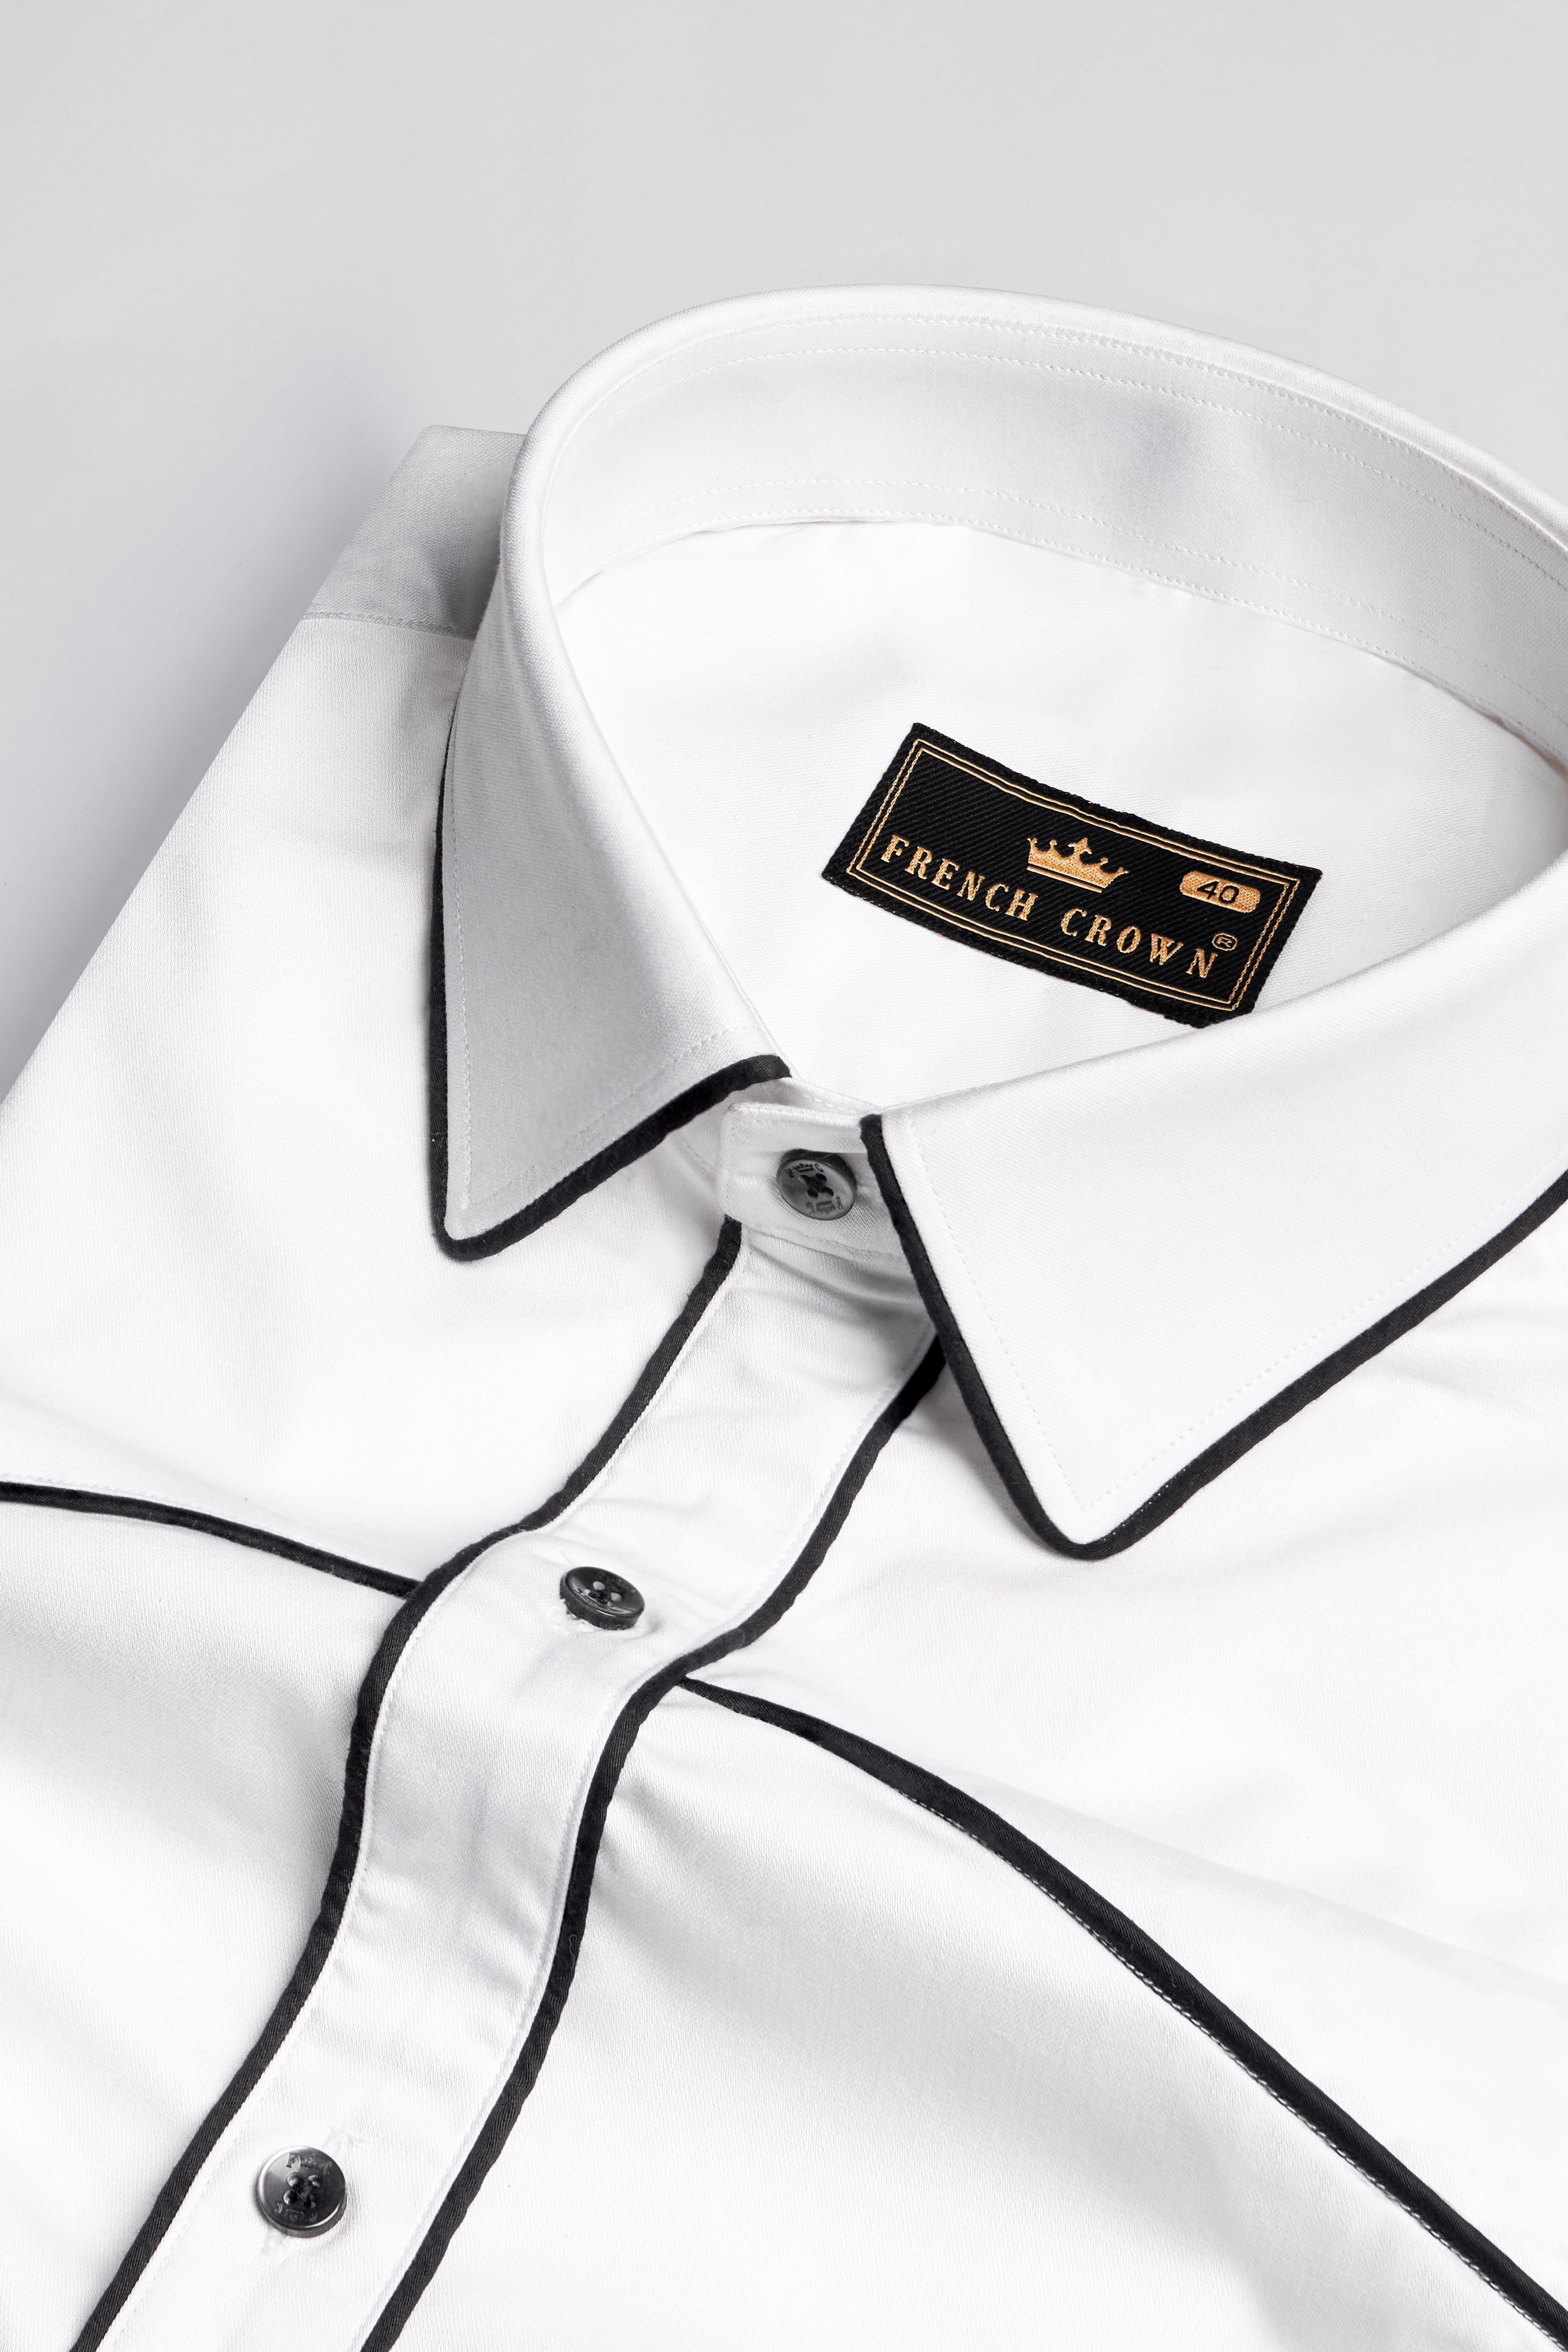 Bright White with Black Piping work Super Soft Premium Cotton Designer Shirt